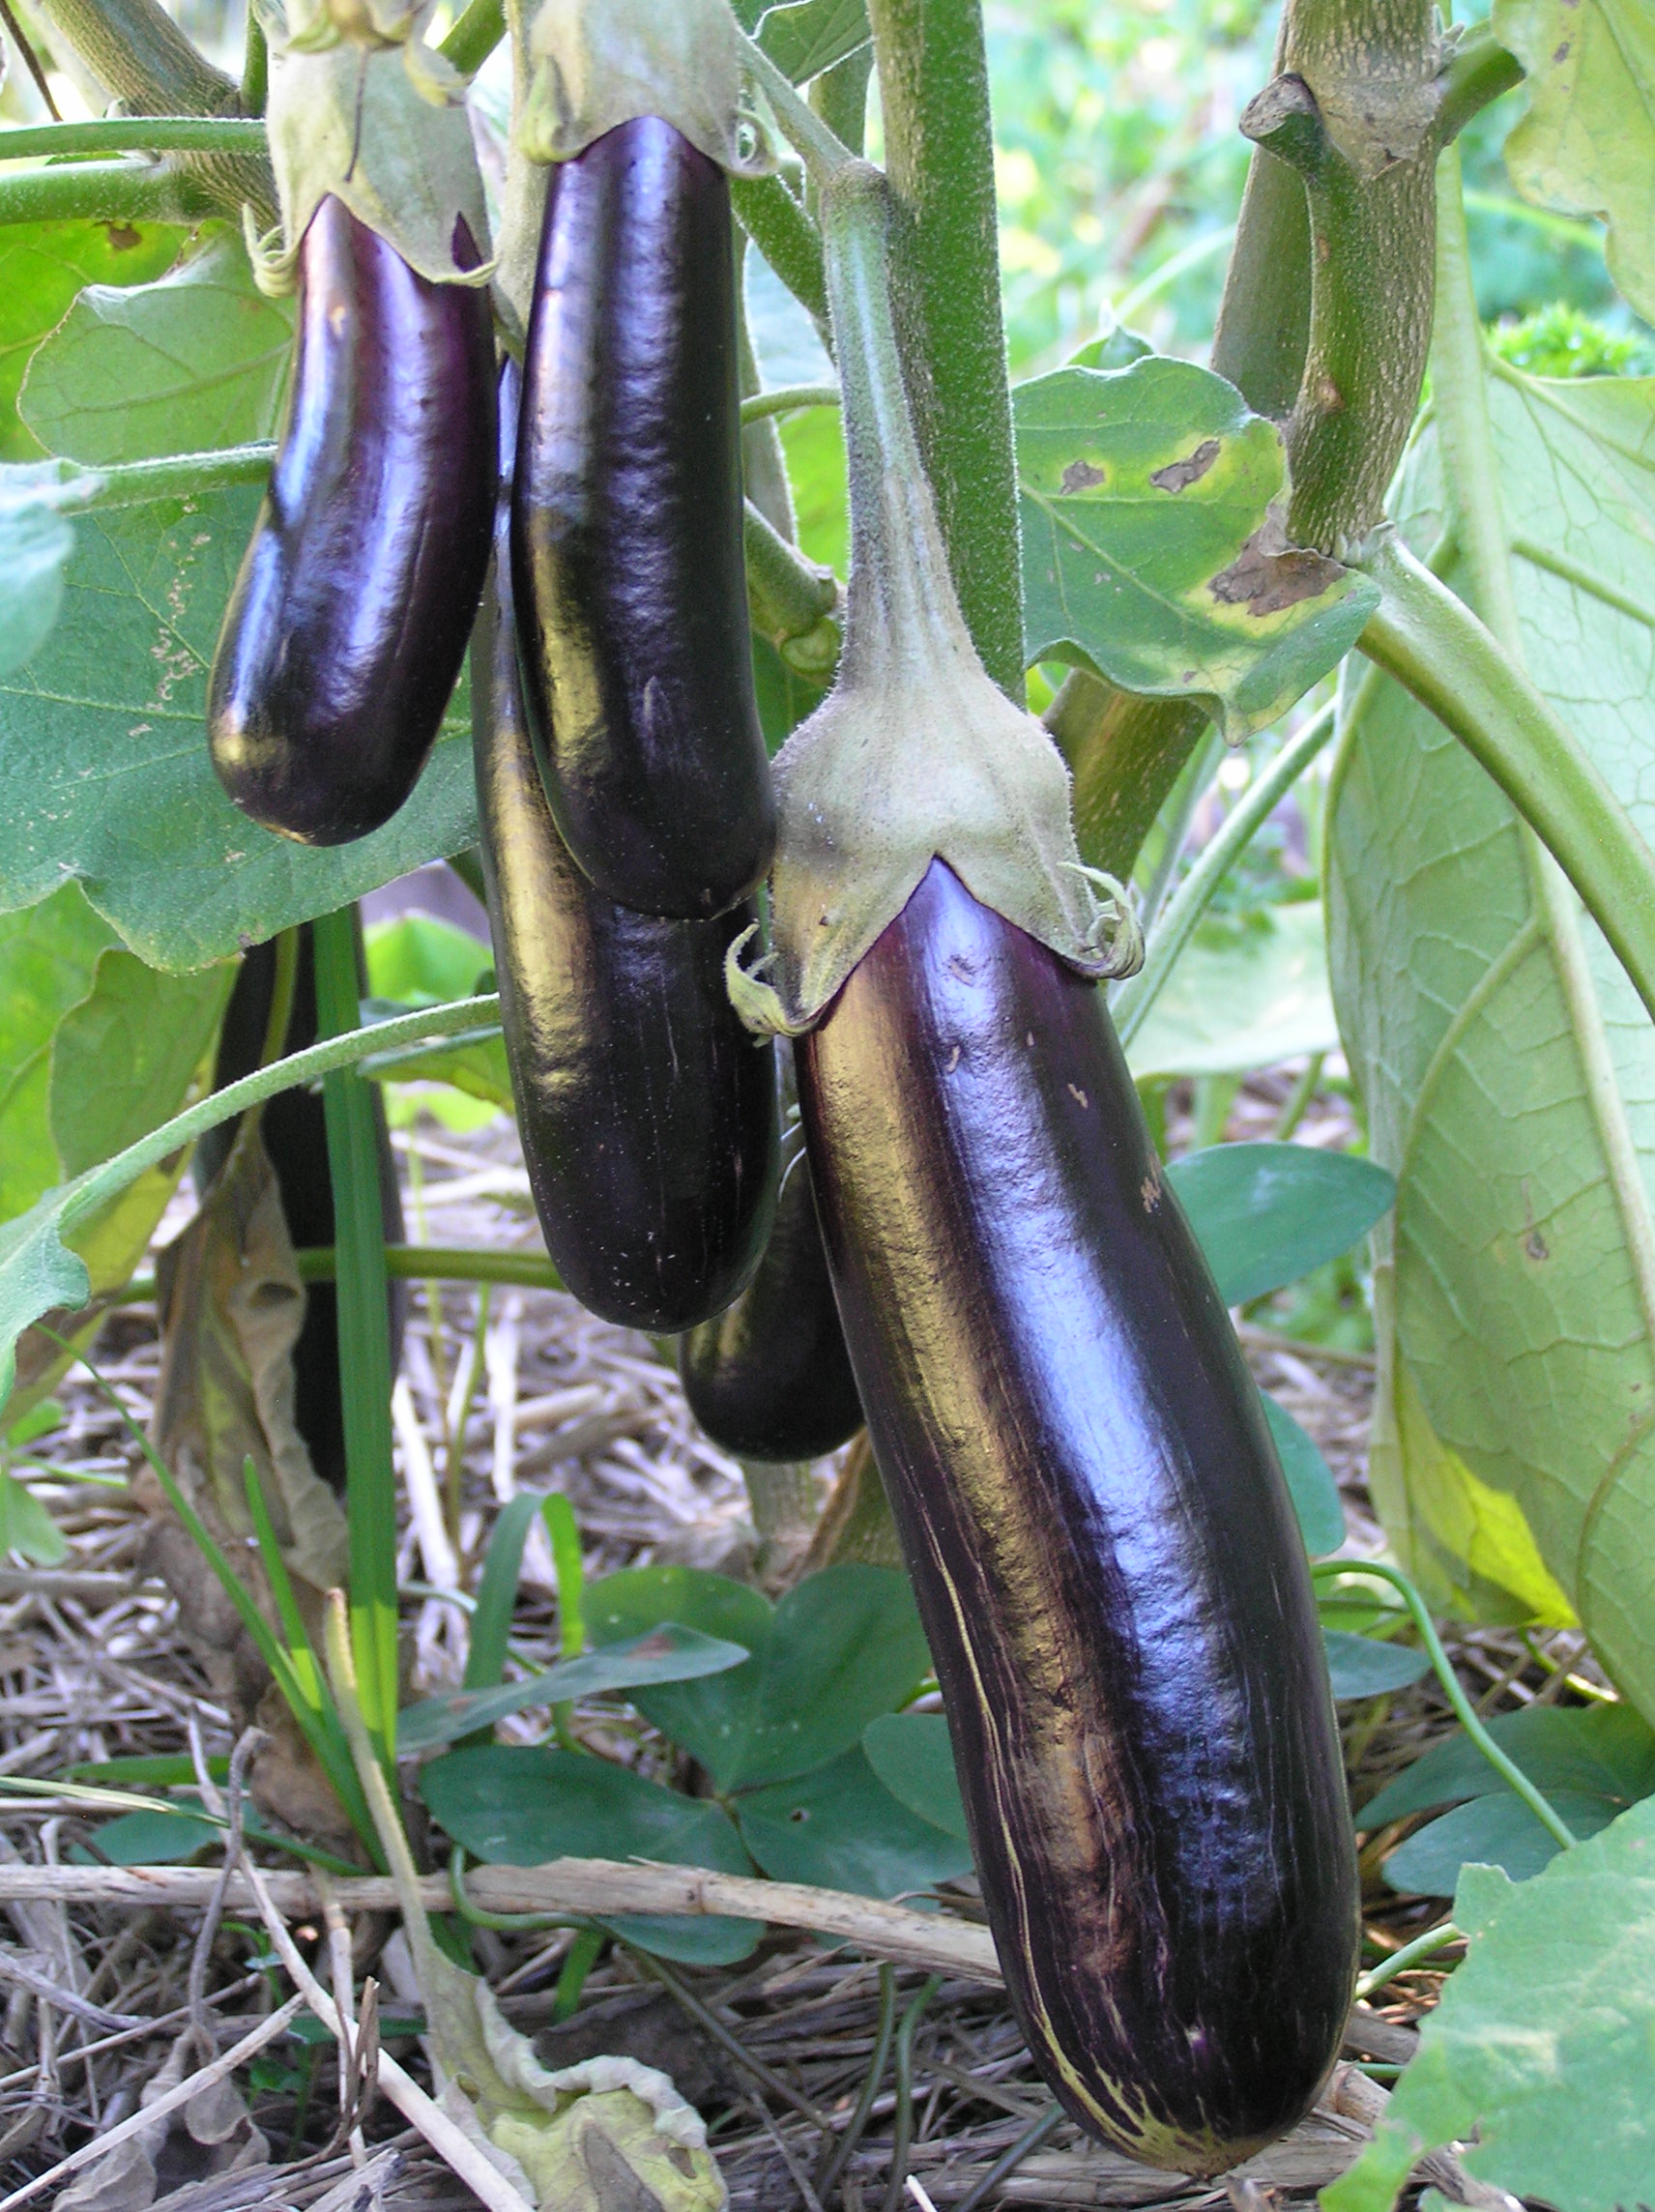 How to Grow Organic Eggplant